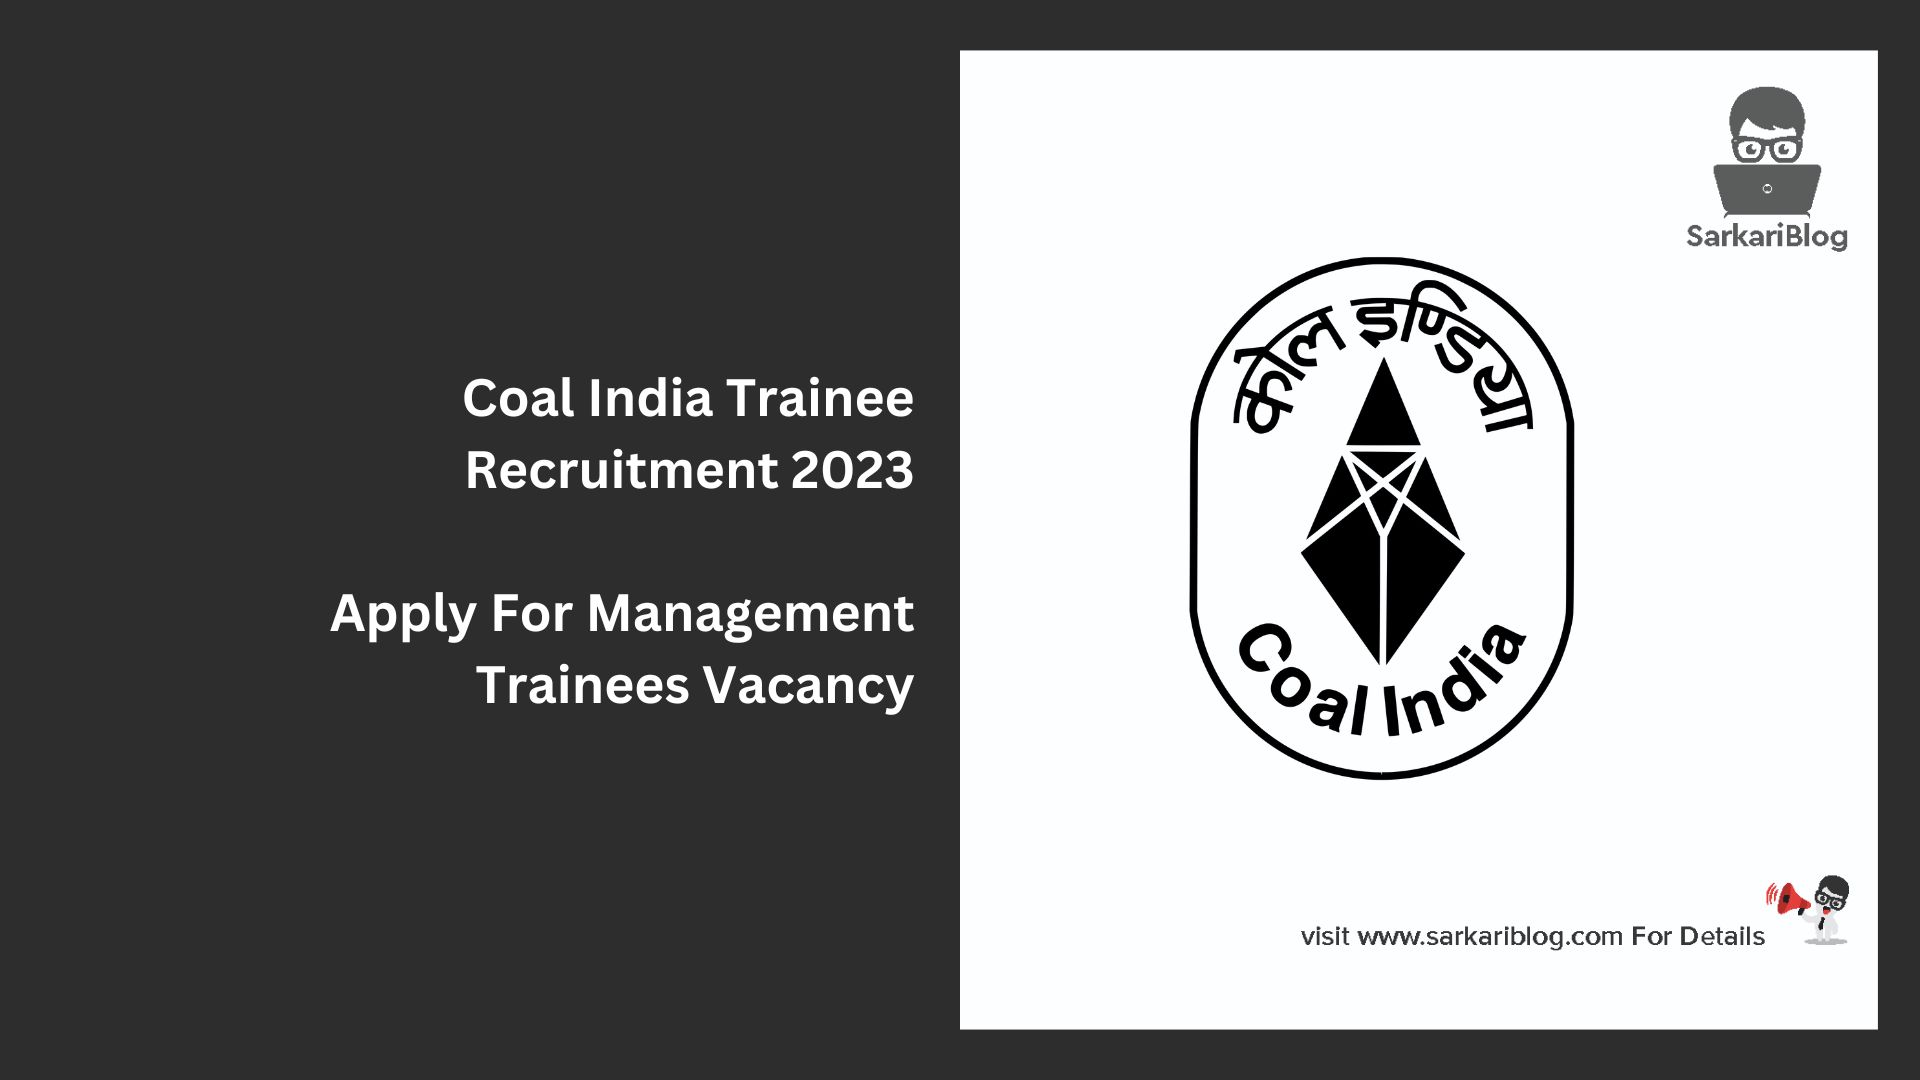 Coal India Trainee Recruitment 2023